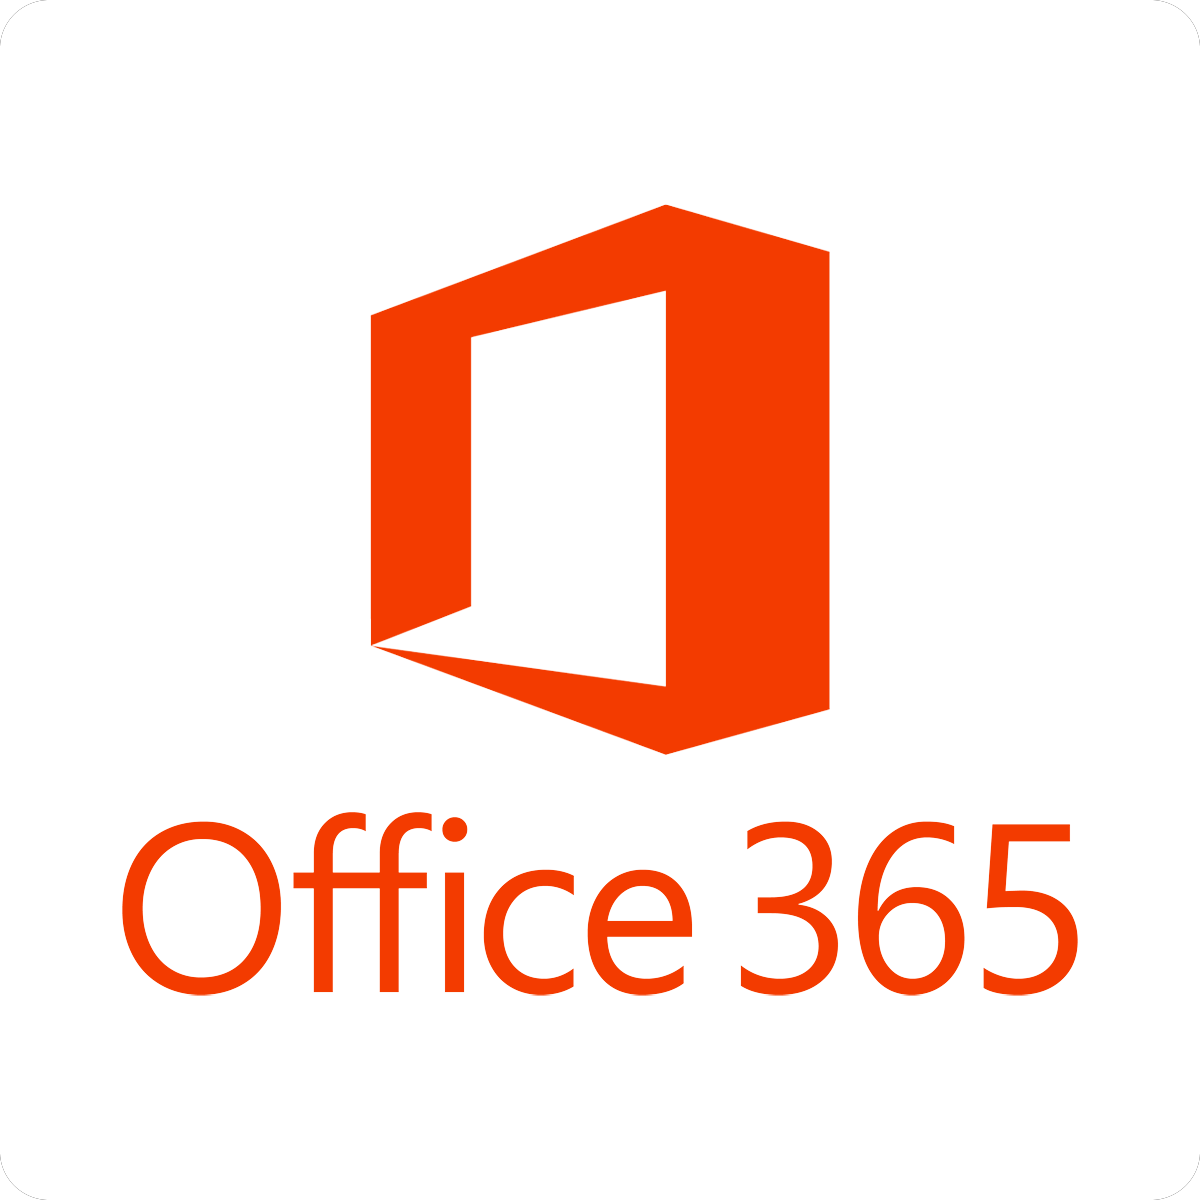 Microsoft Office 365 Product Key Generator + Activation Key Full Crack